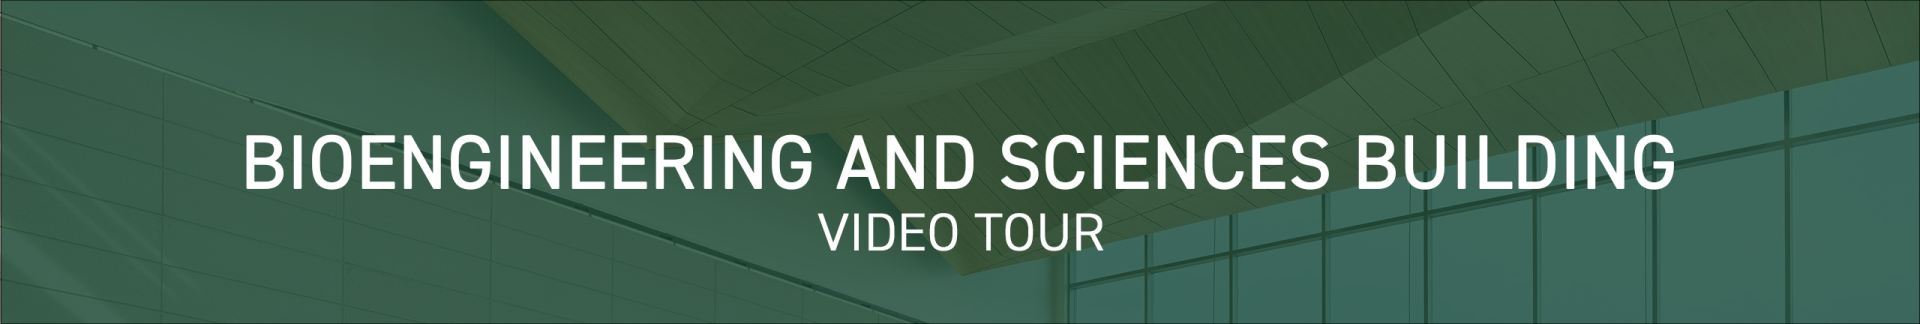 Bioengineering and Sciences Building Video Tour